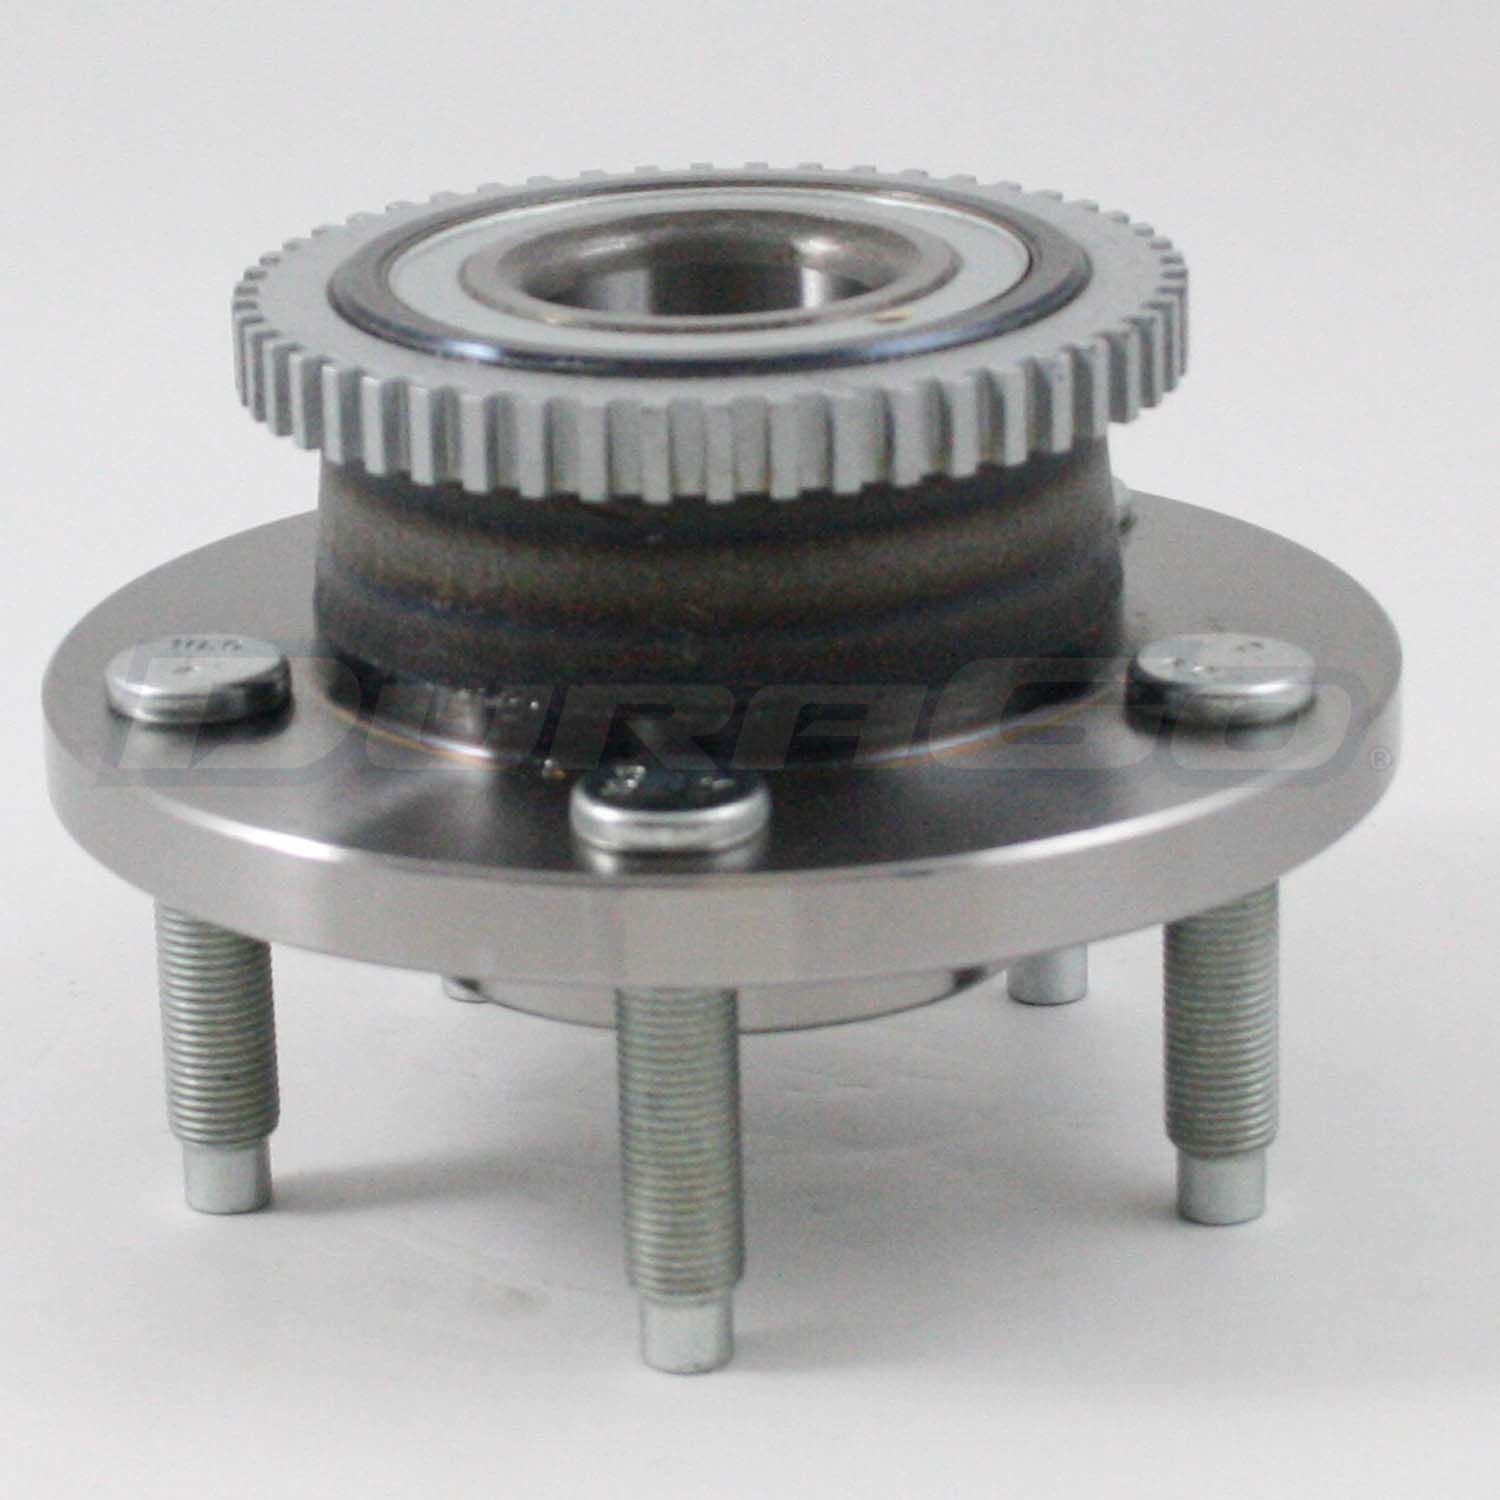 DURAGO - Wheel Bearing & Hub Assembly - D48 295-13221